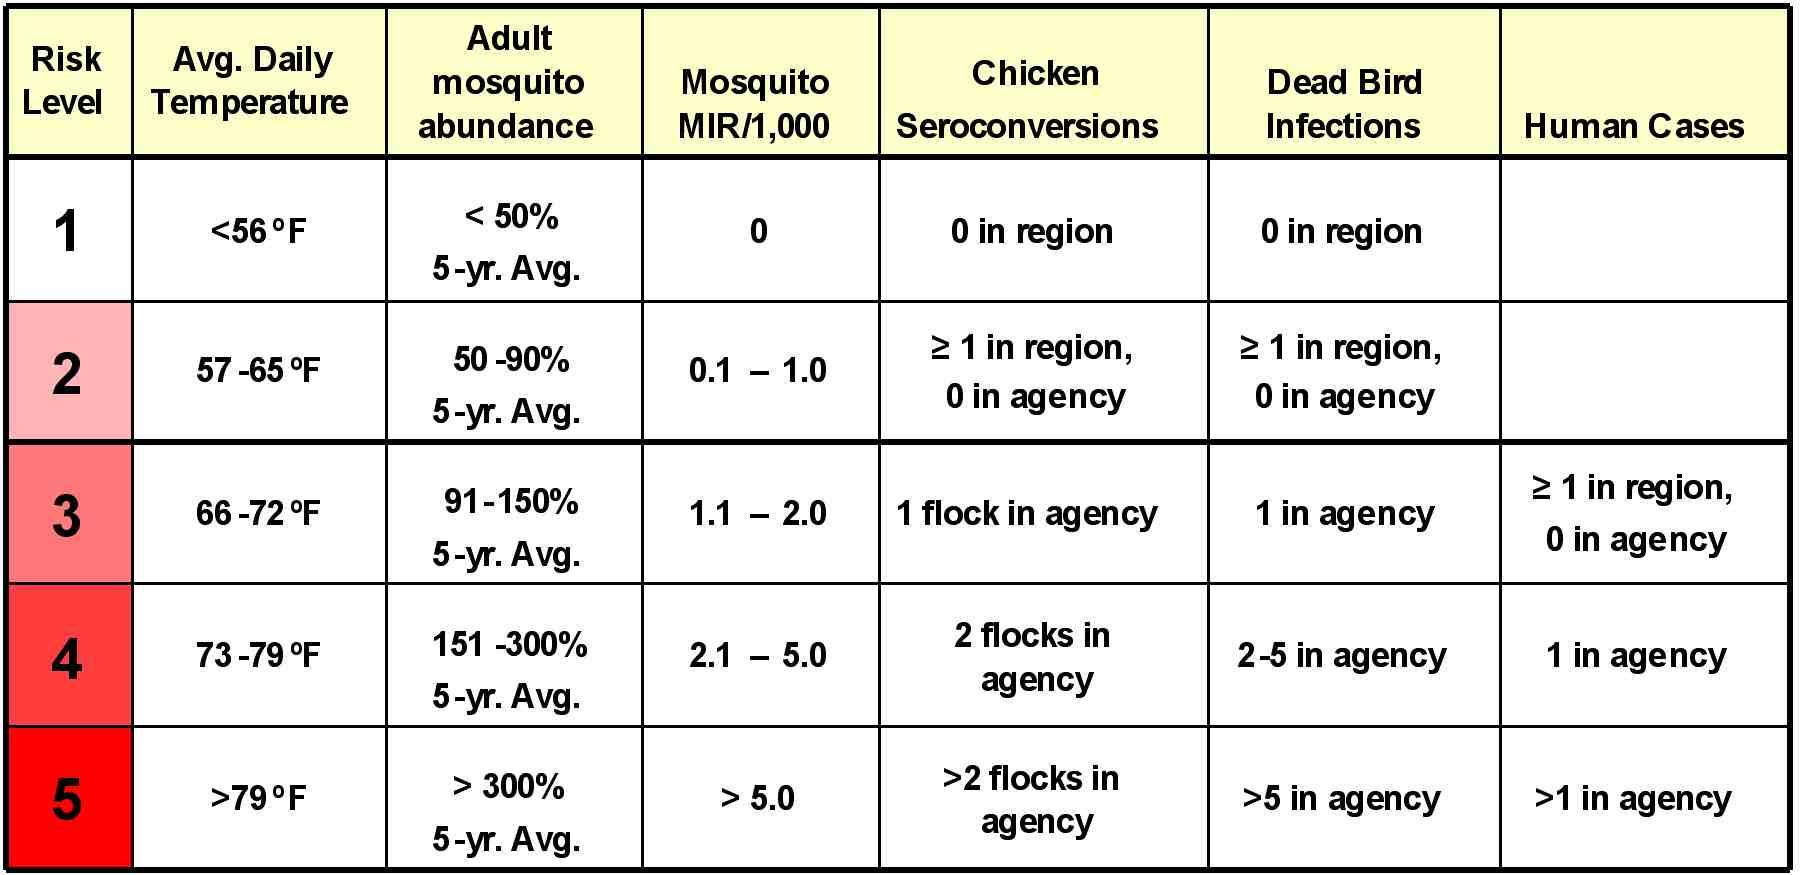 Focus on reducing/targeting mosquito breeding habitats